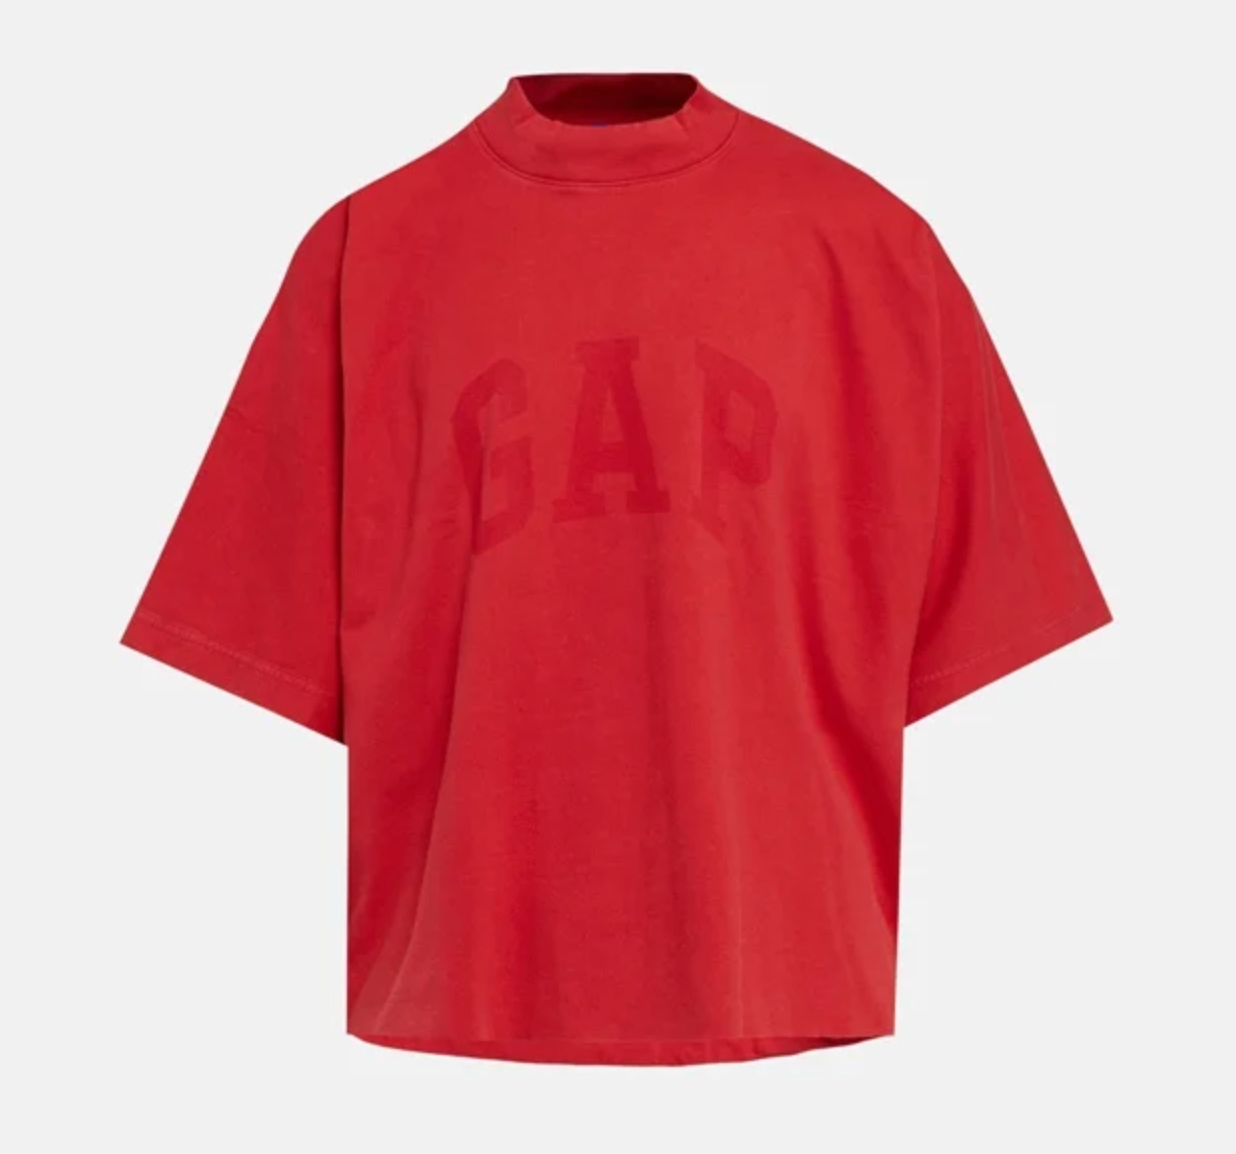 Yeezy Gap Engineered by Balenciaga T-Shirt Red Front Lodz Polska